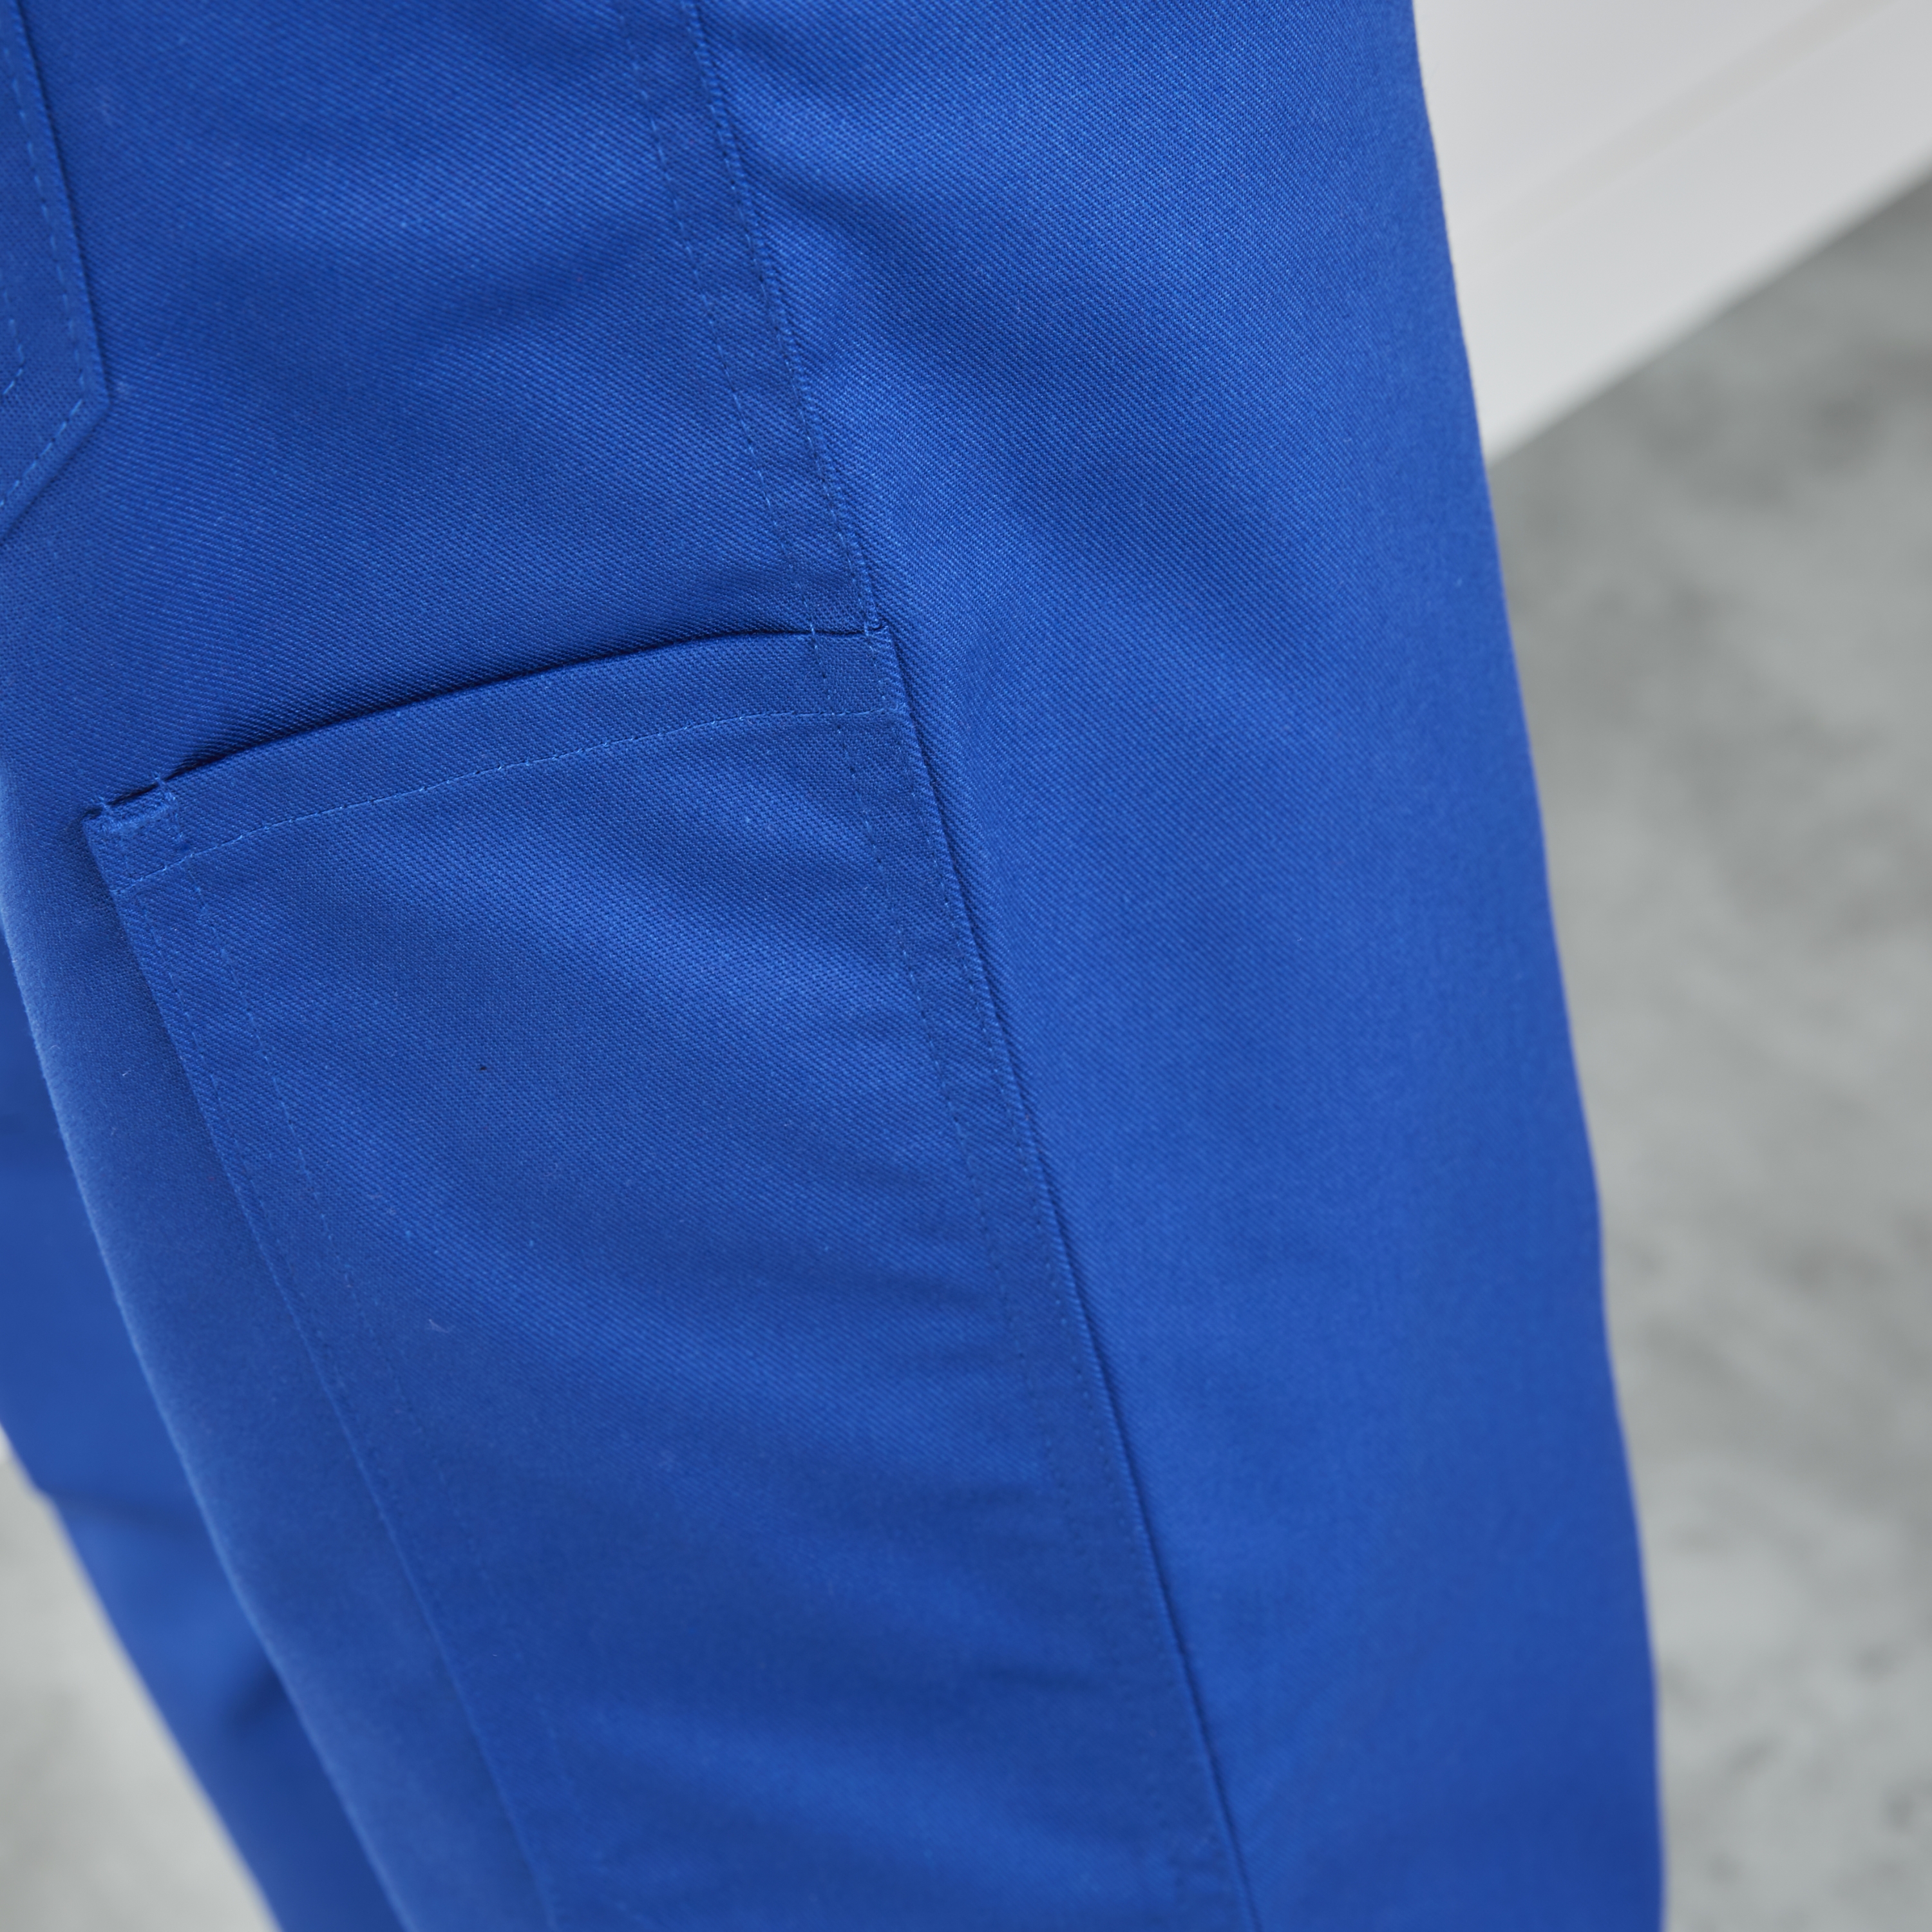 Pantalon de travail coupe droite 3 poches Polycoton Bleu